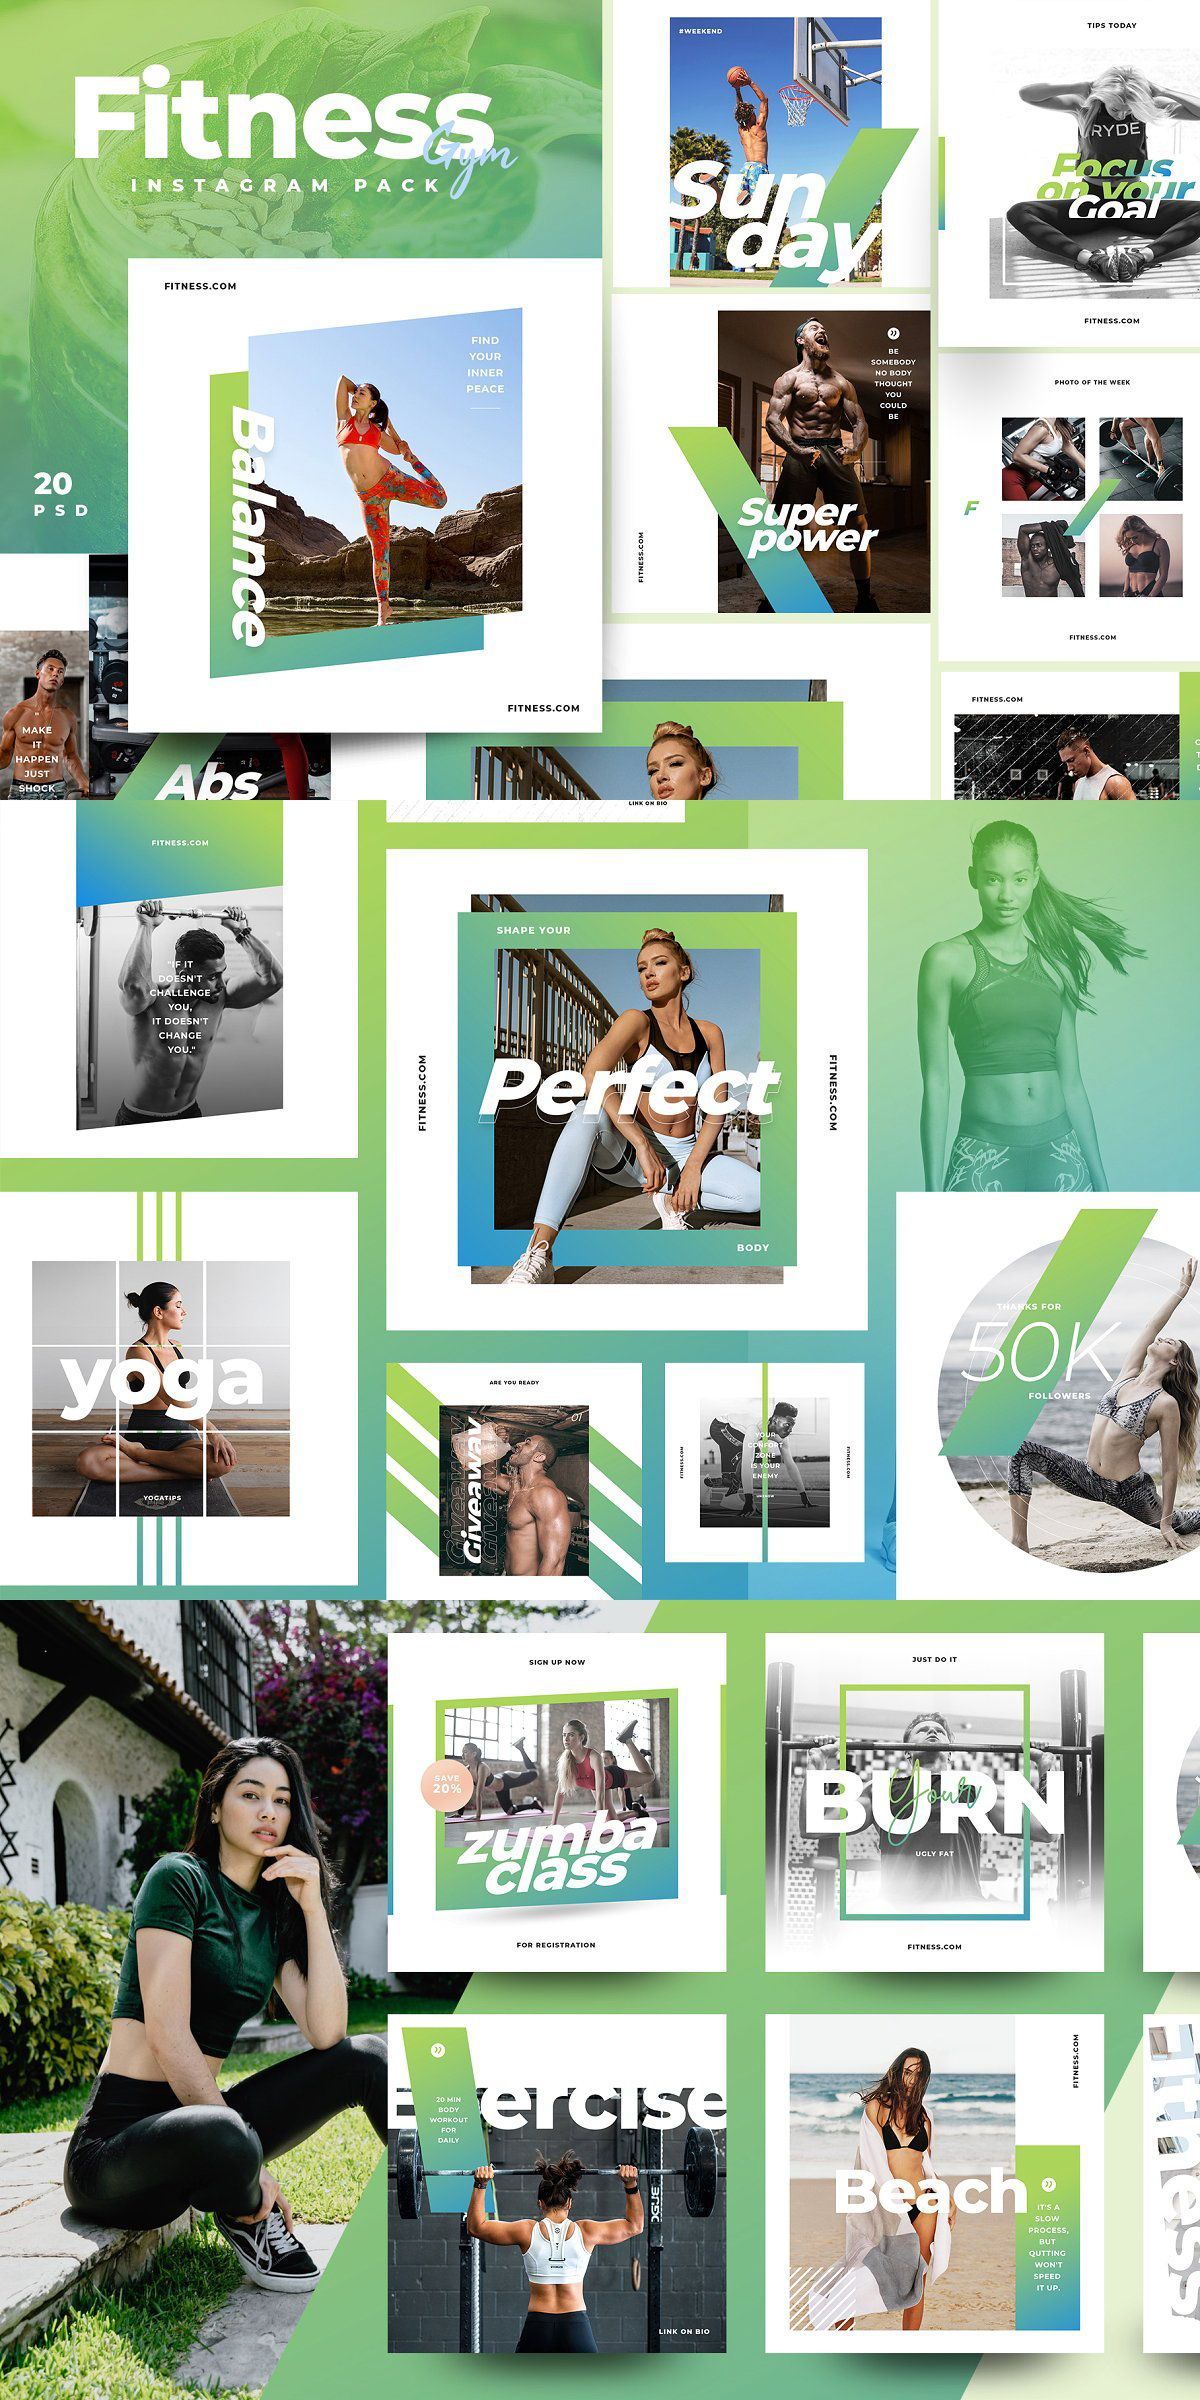 Fitness & Gym instagram pack 3.0 - Fitness & Gym instagram pack 3.0 -   12 fitness Design banner ideas